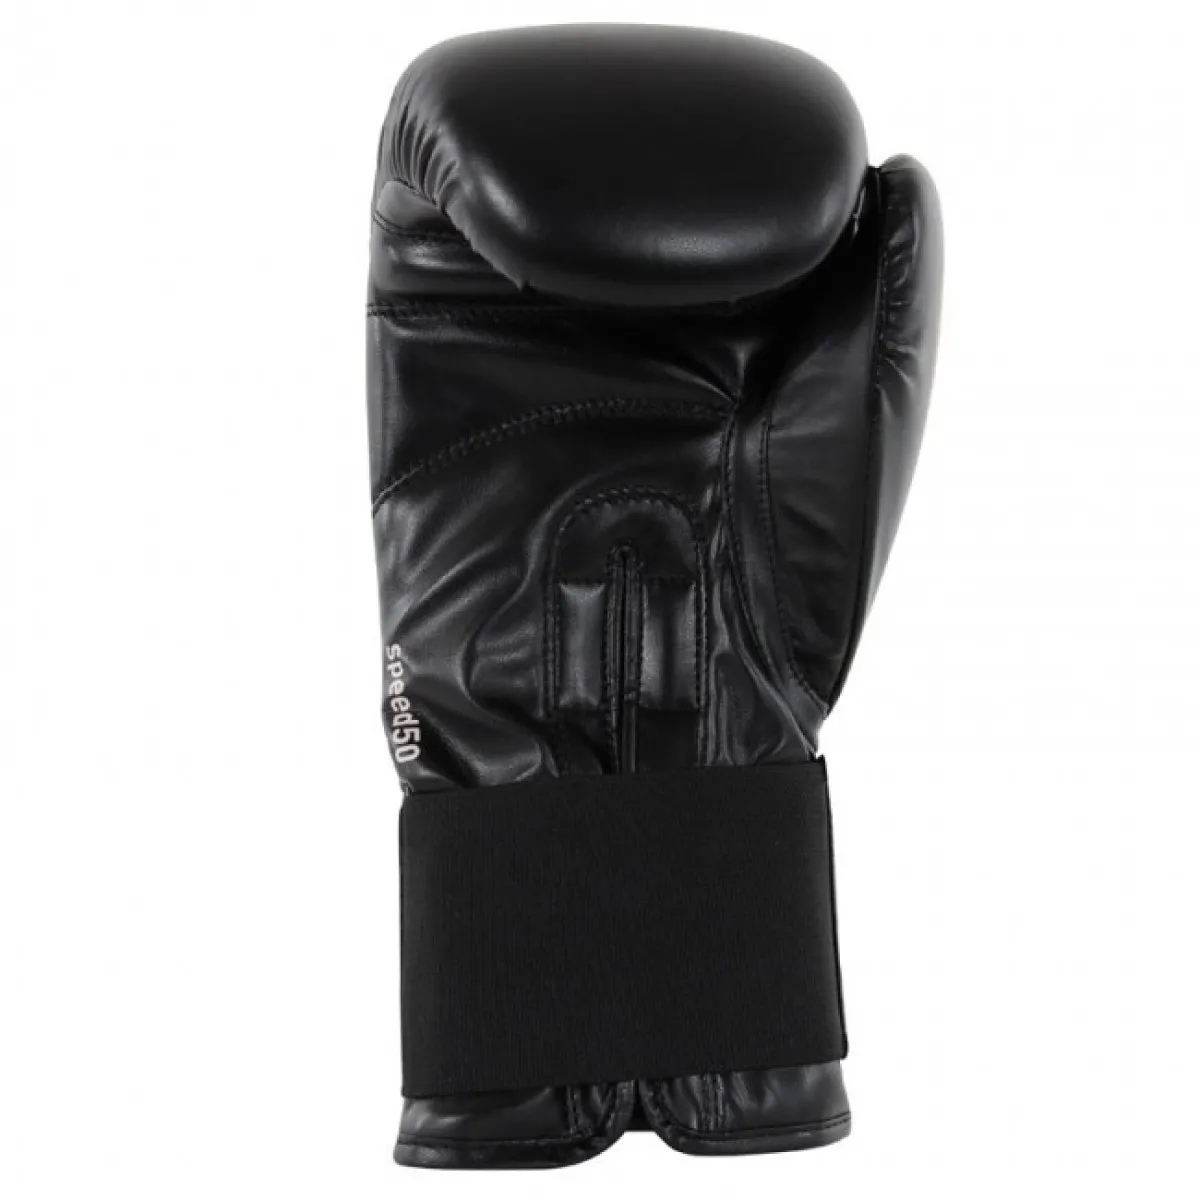 adidas Speed 50 black/white boxing gloves